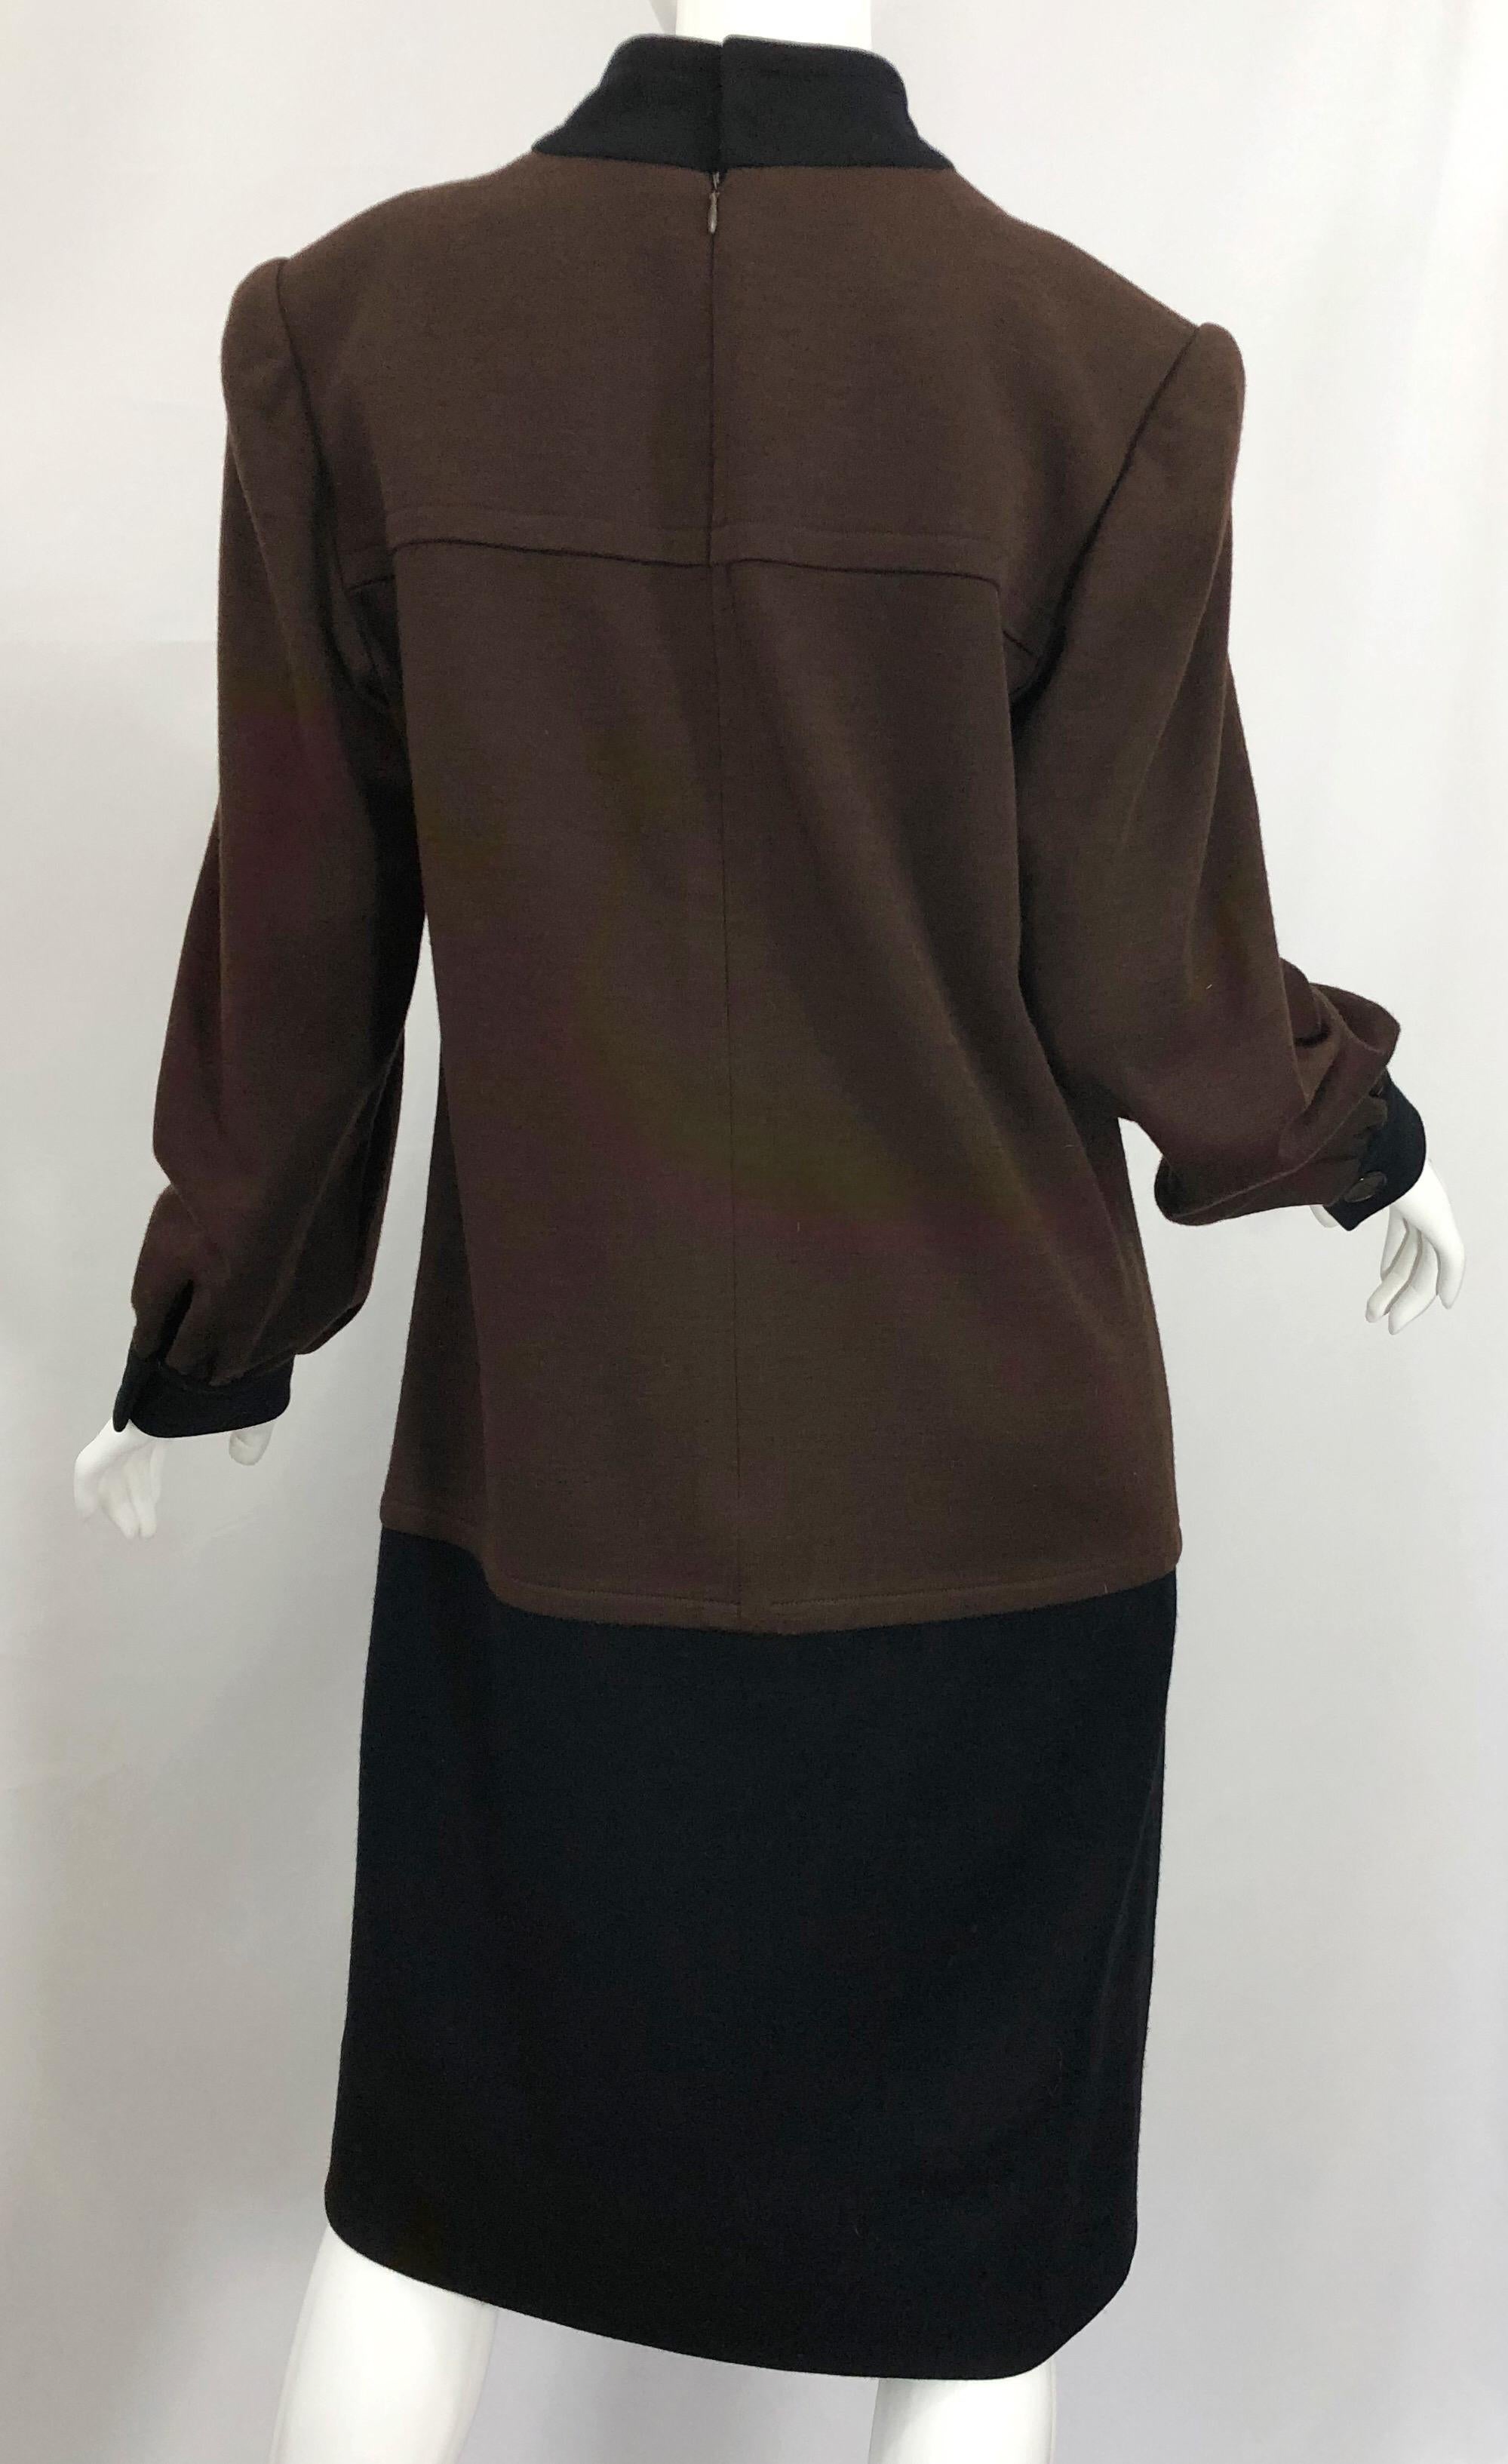 Vintage 80s Givenchy Brown and Black Virgin Wool Long Sleeve Mock Neck Sac Dress For Sale 6